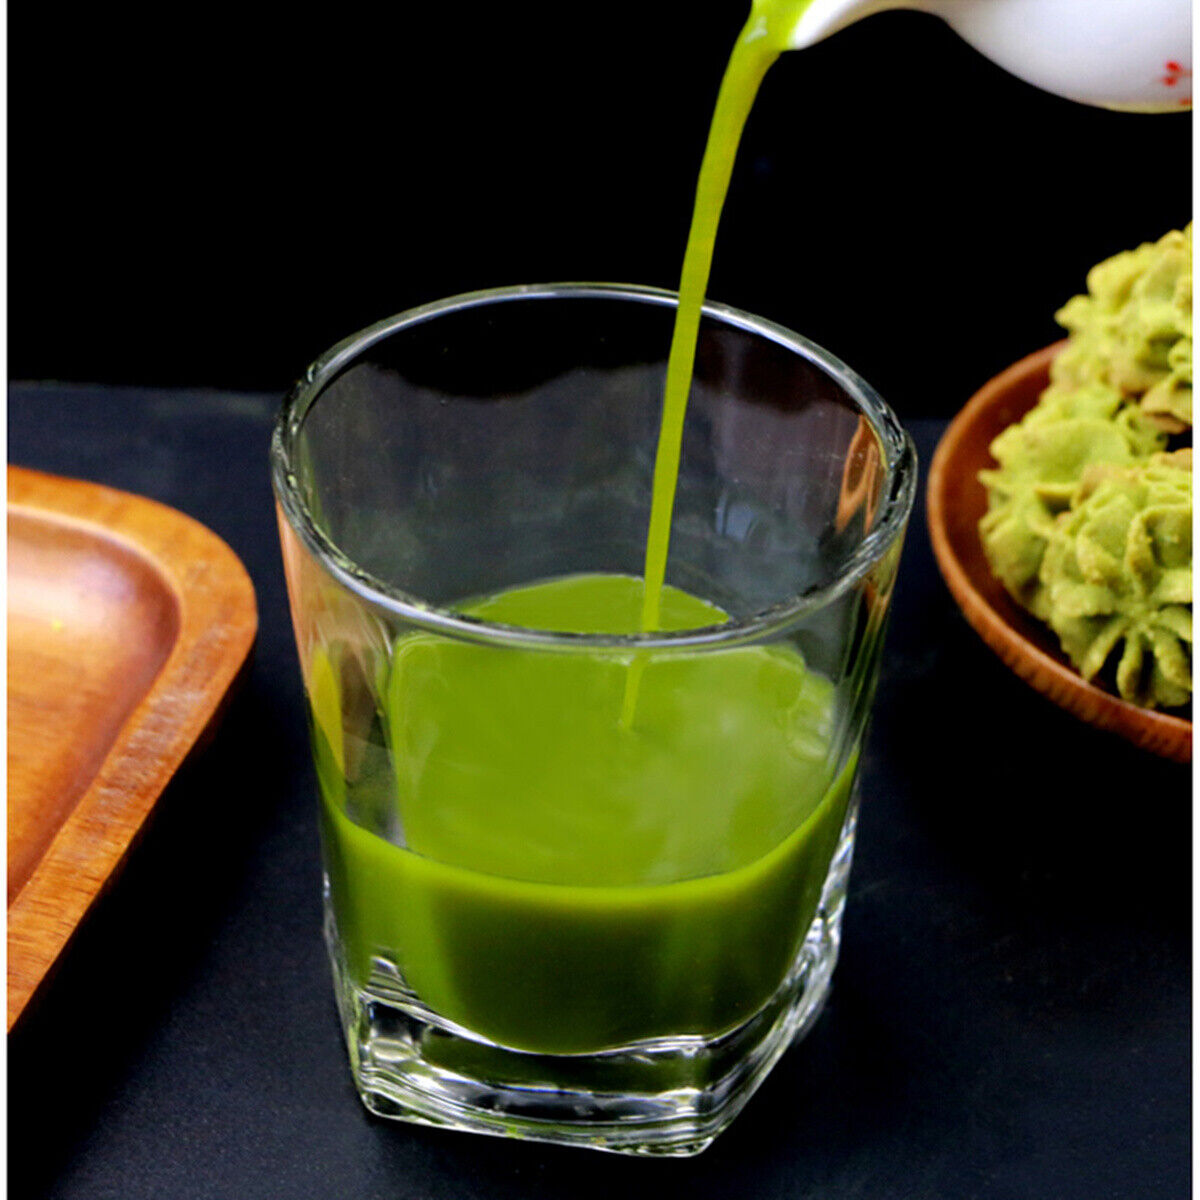 100% Natural Premium Slimming Reduce Fat 150g Japanese Matcha Green Tea Powder